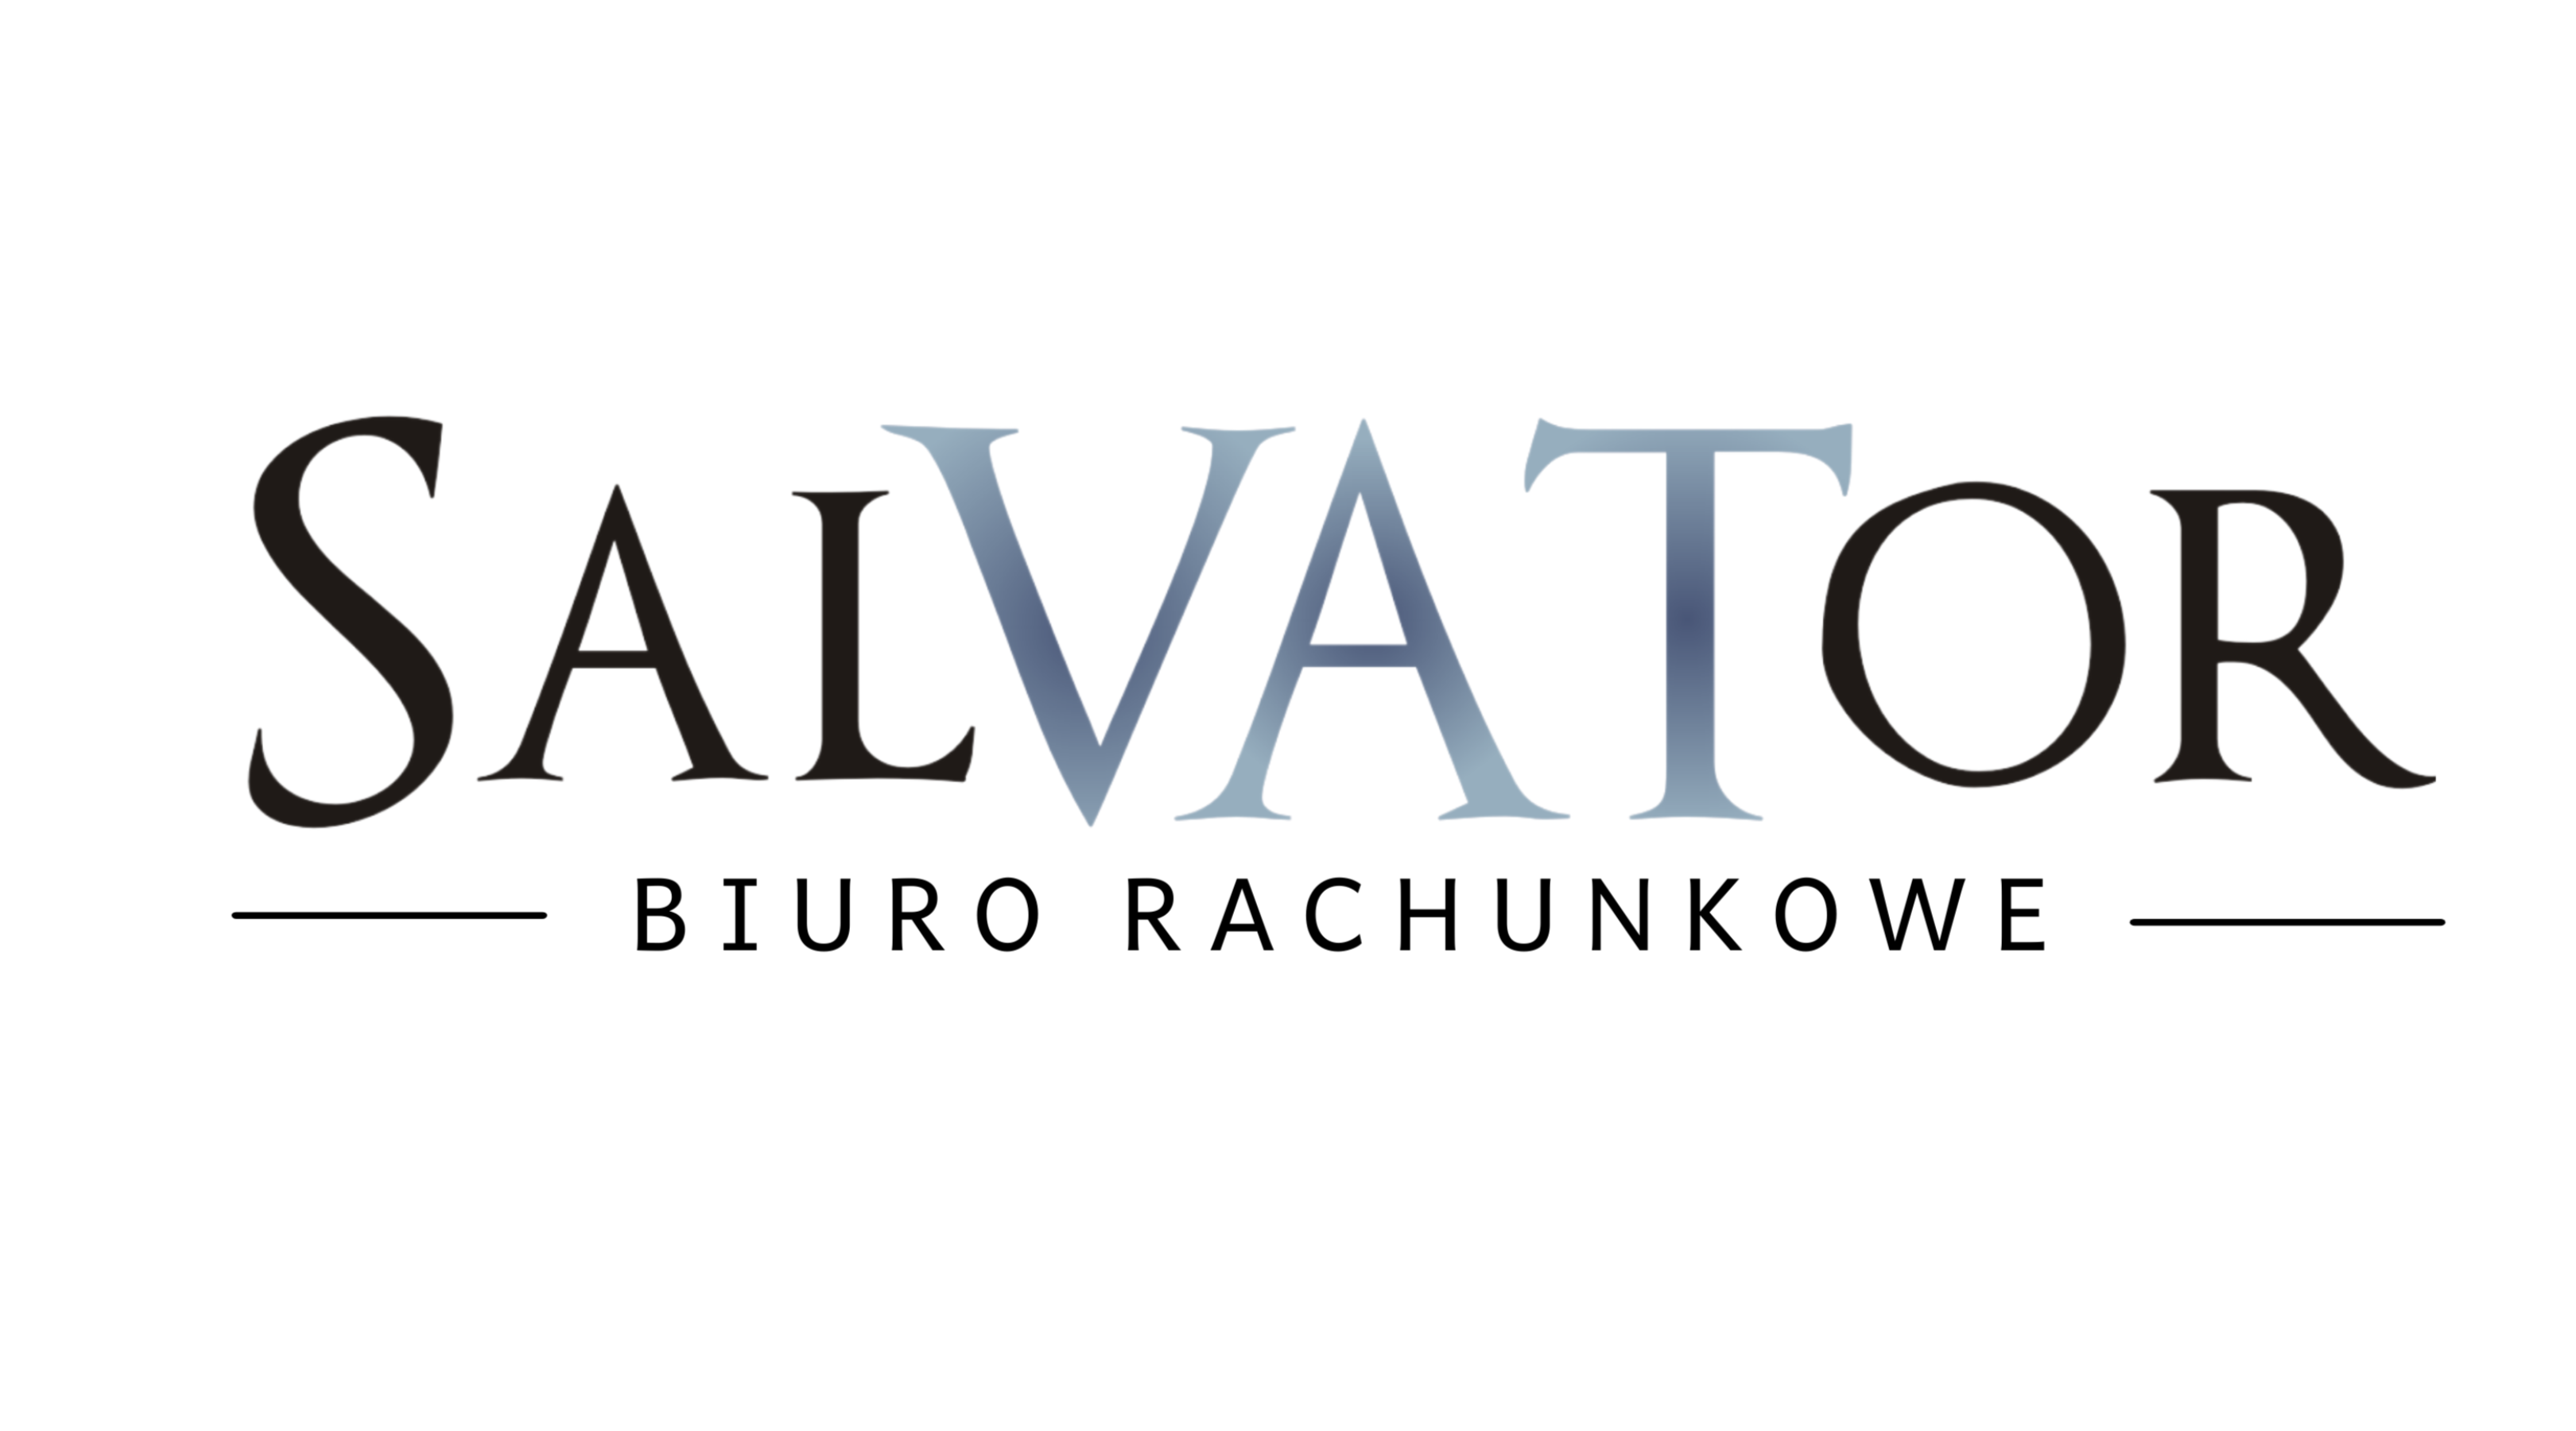 Salvator - Biuro rachunkowe - logo